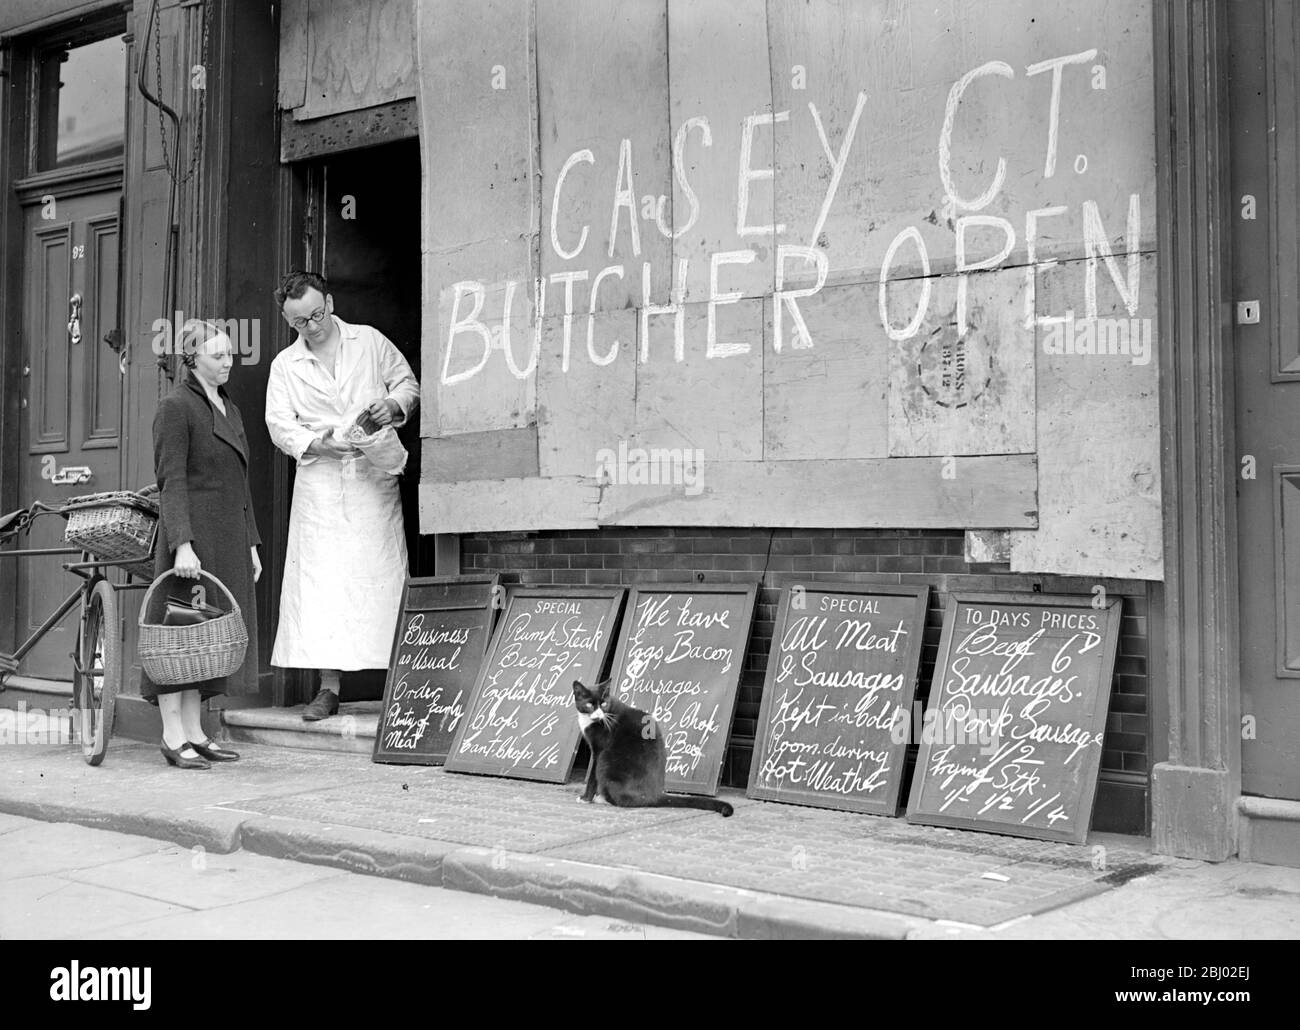 War Crisis, 1939 - Air Raid precautions - The barricaded Butcher's shop. - 8 September 1939 Stock Photo